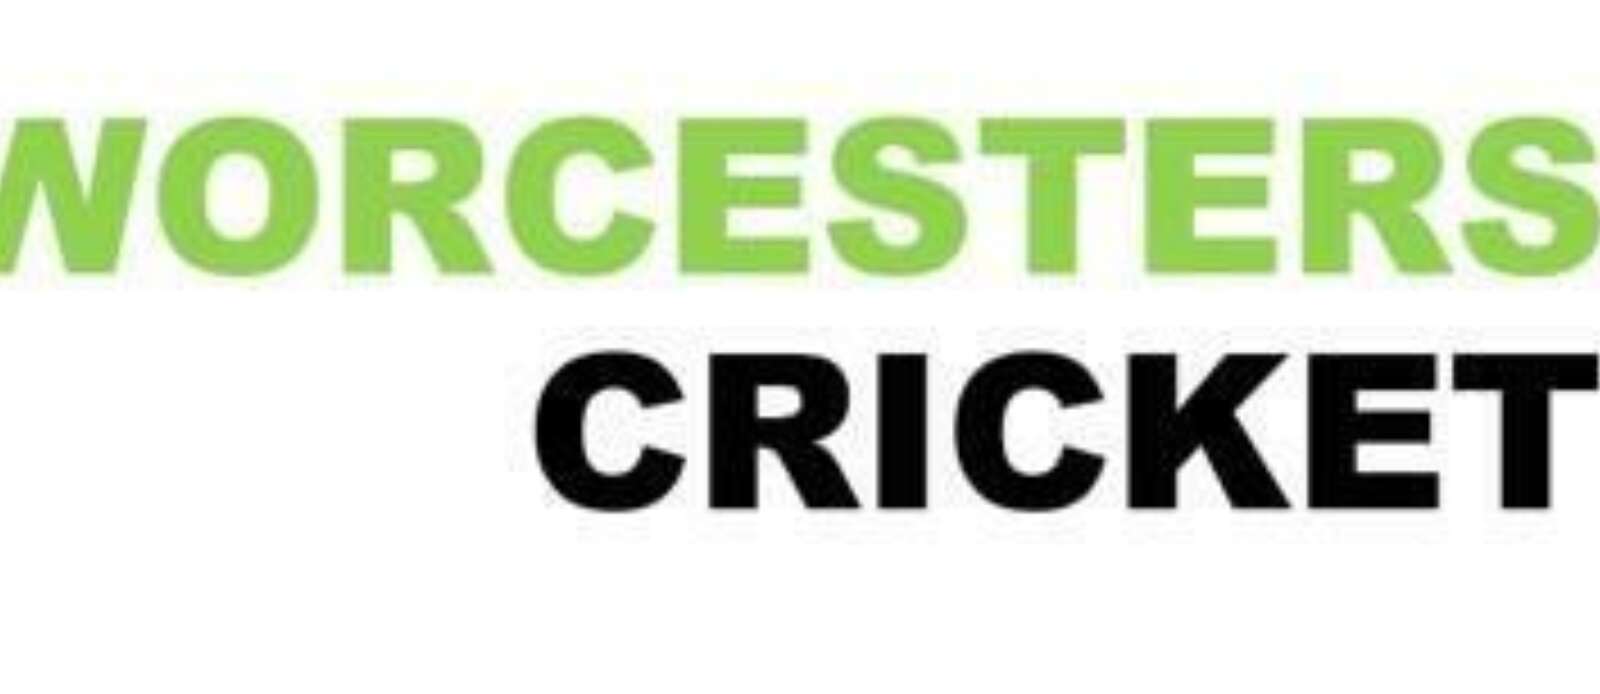 Director of Cricket Header Image.